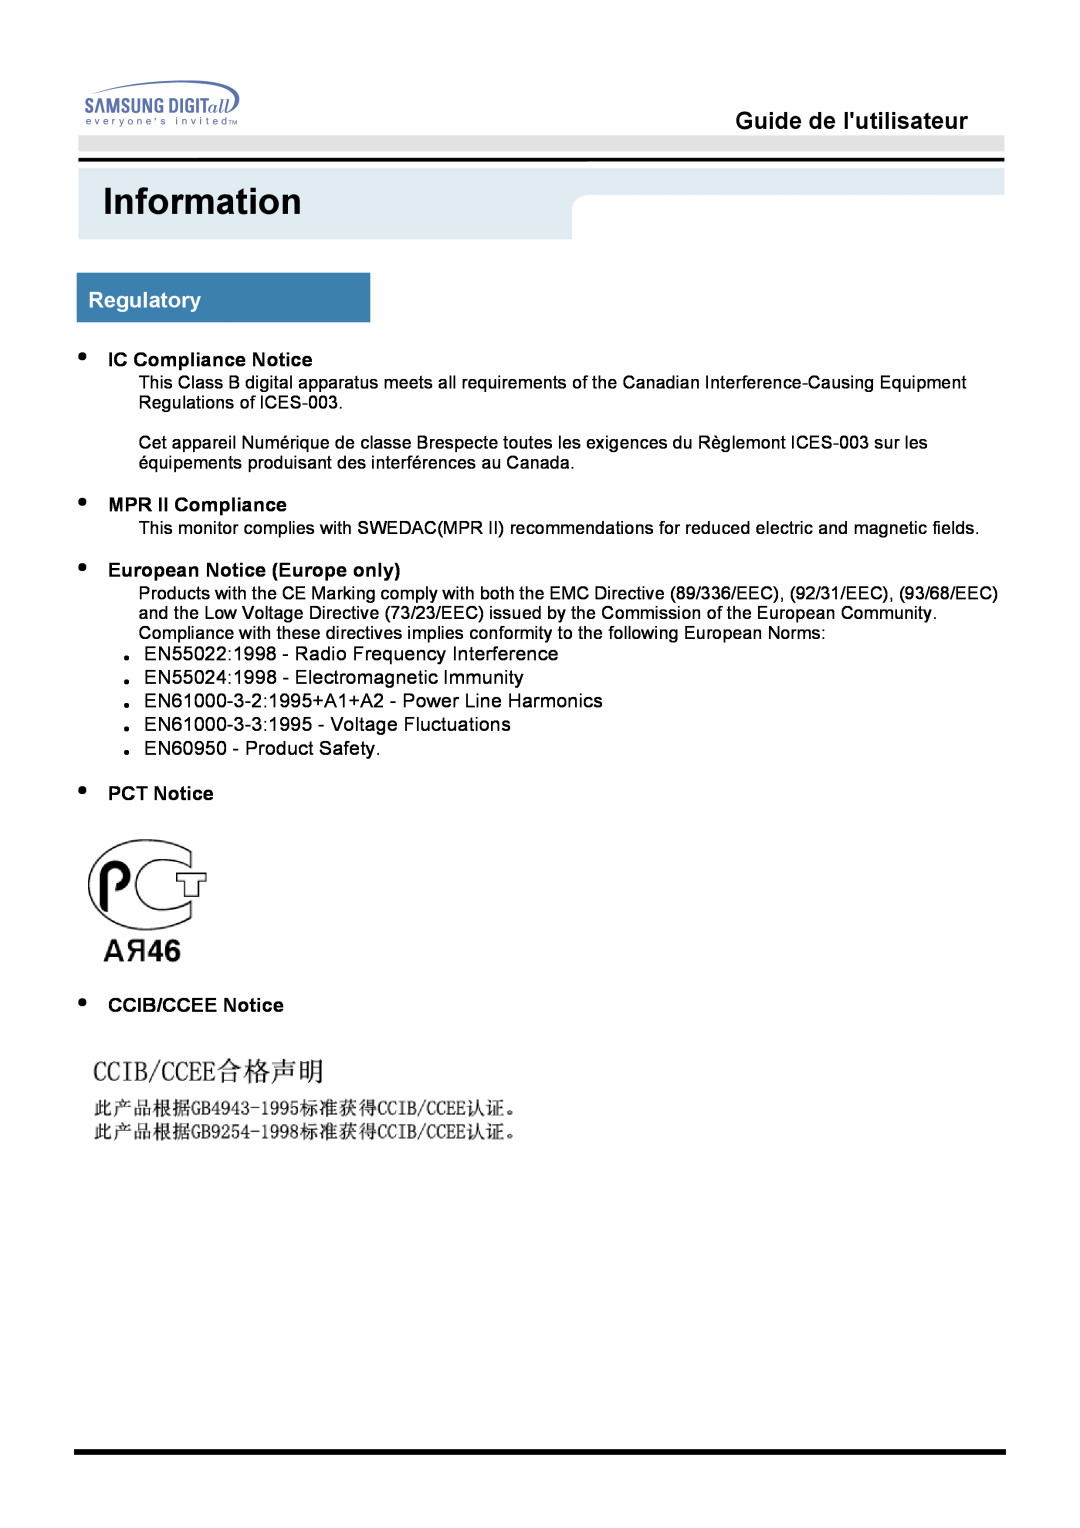 Samsung GH15MSSN/EDC, GH15MSSS/EDC Information, Guide de lutilisateur, Regulatory, IC Compliance Notice, MPR II Compliance 